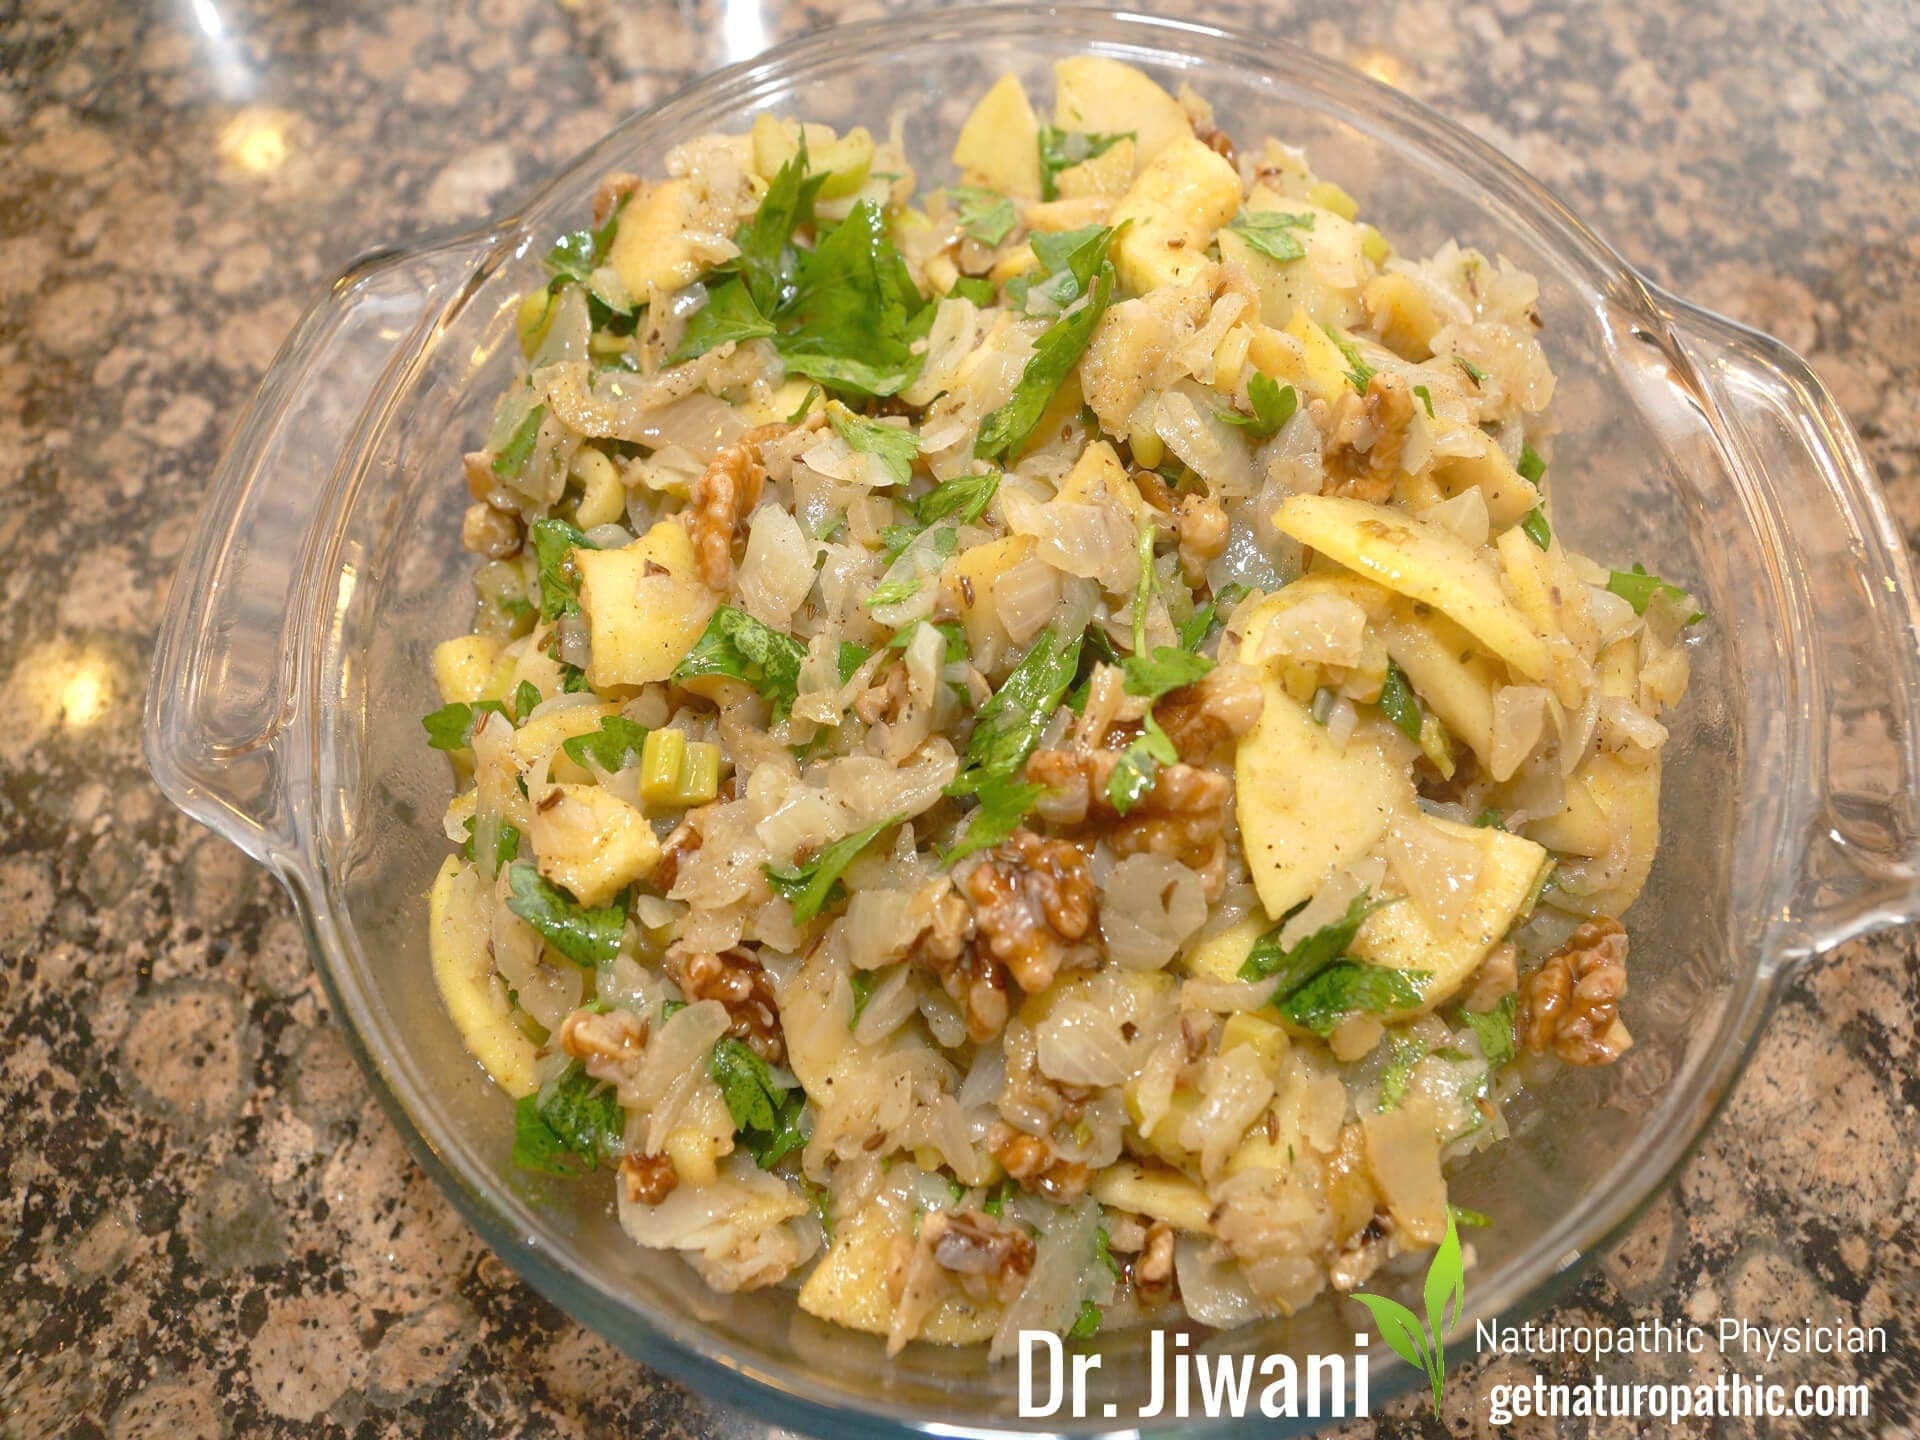 Dr. Jiwani's Low Carb Vegan Stuffing: Gluten-Free, Egg-Free, Dairy-Free, Soy-Free, Corn-Free, Ideal For Vegan, Paleo, Keto, Diabetic & Candida Diets | Dr. Jiwani's Naturopathic Nuggets Blog